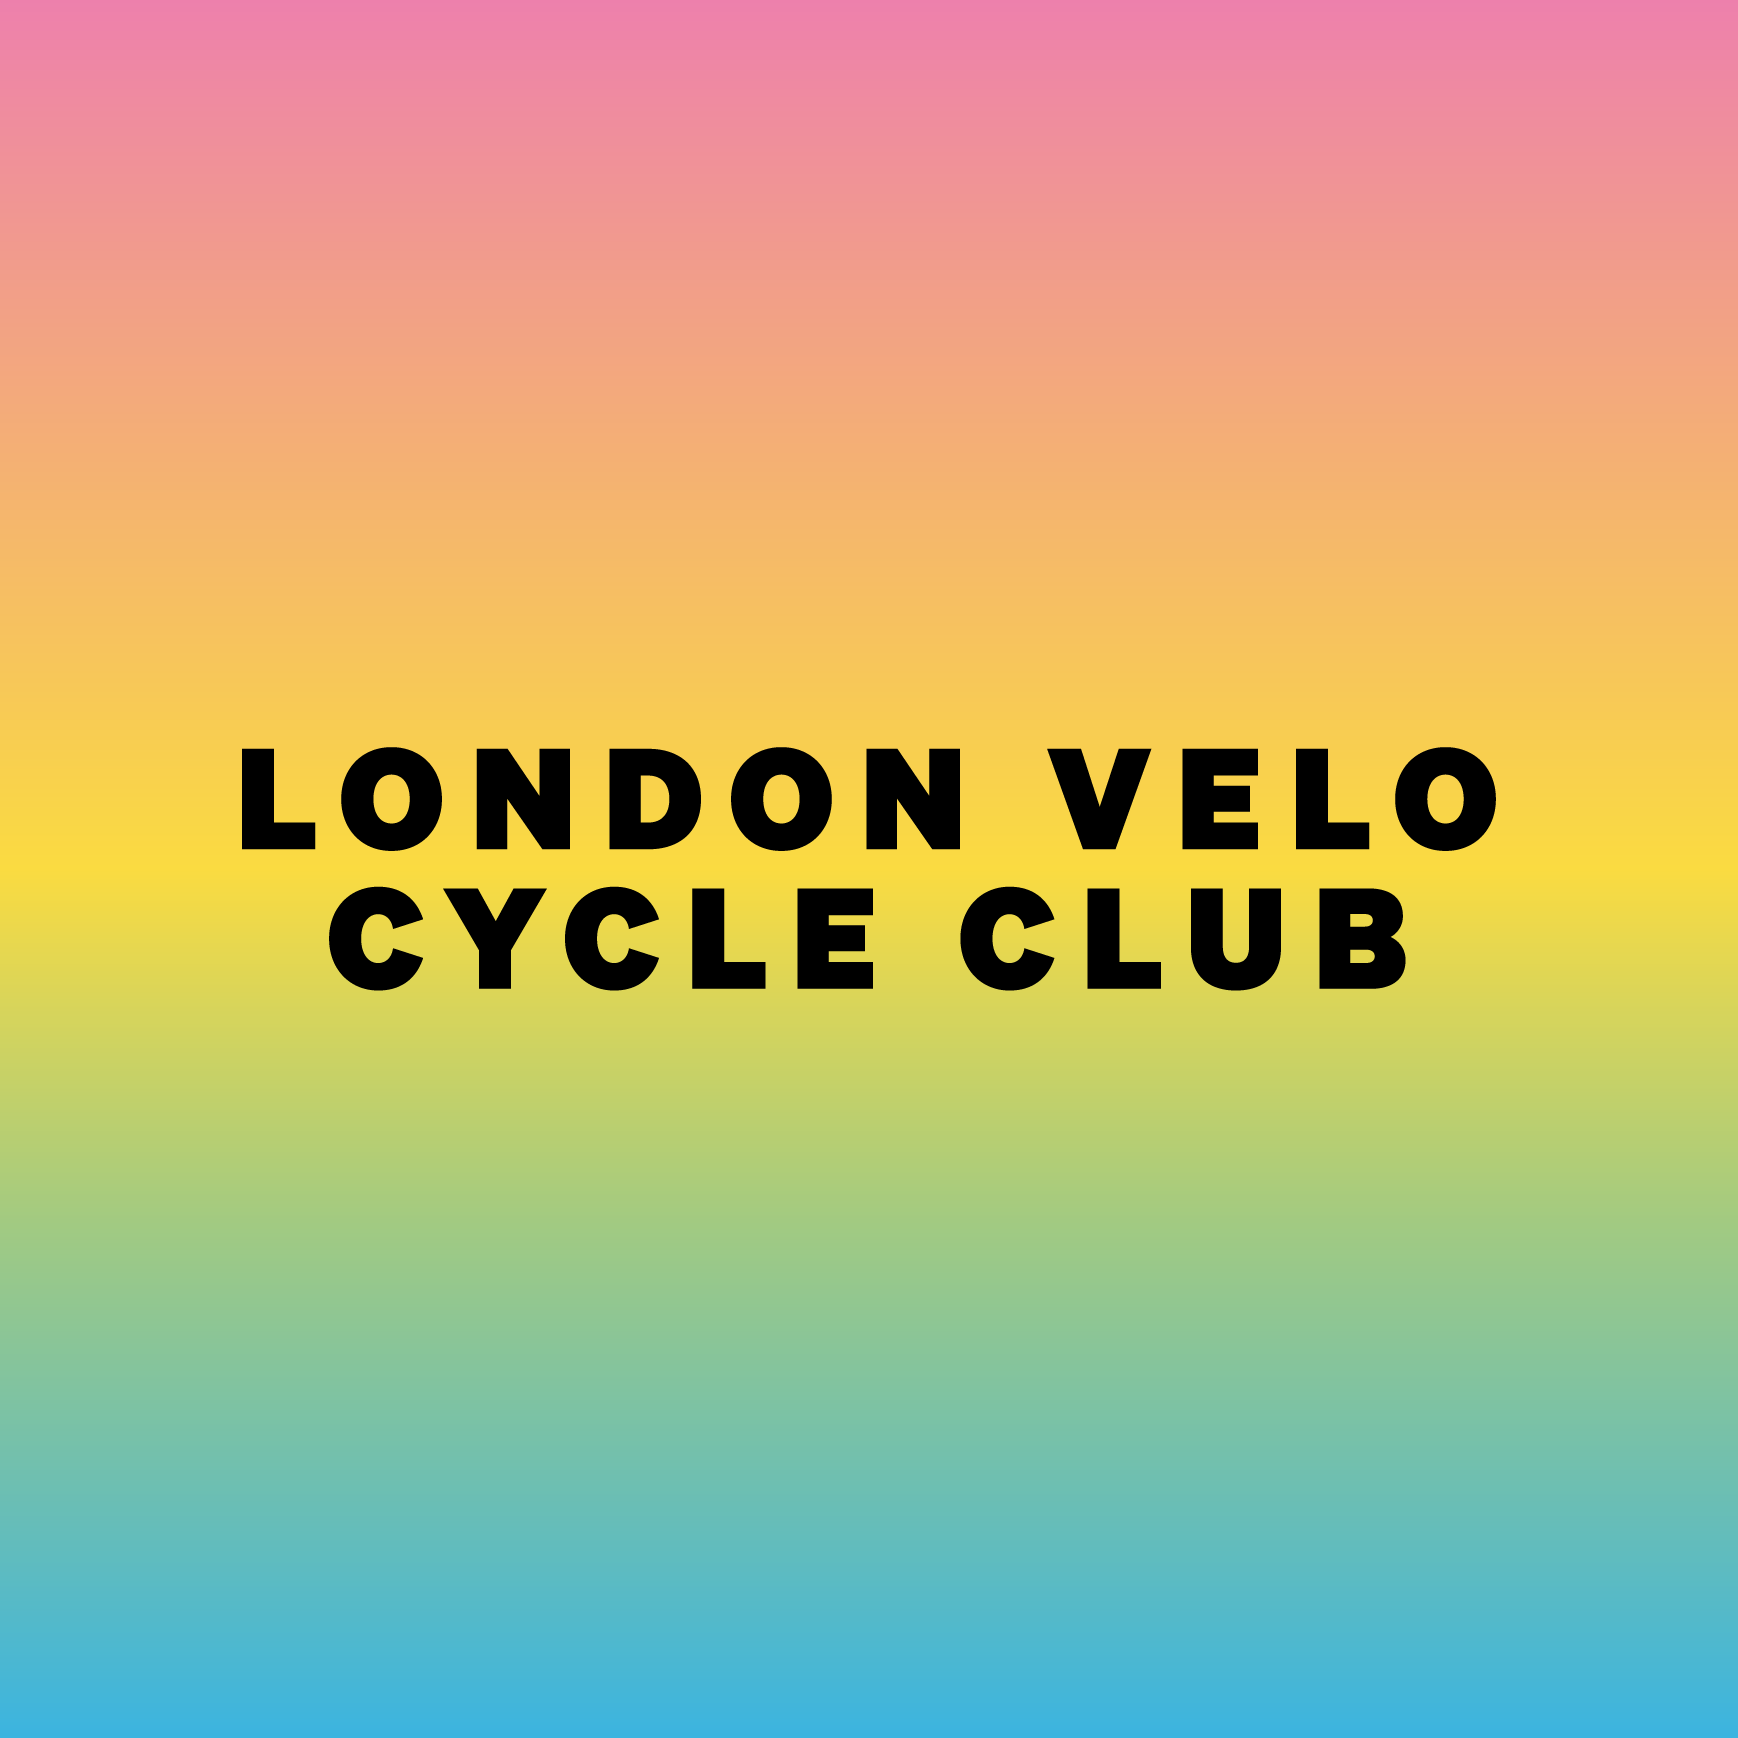 Club Image for LONDON VELO CYCLING CLUB